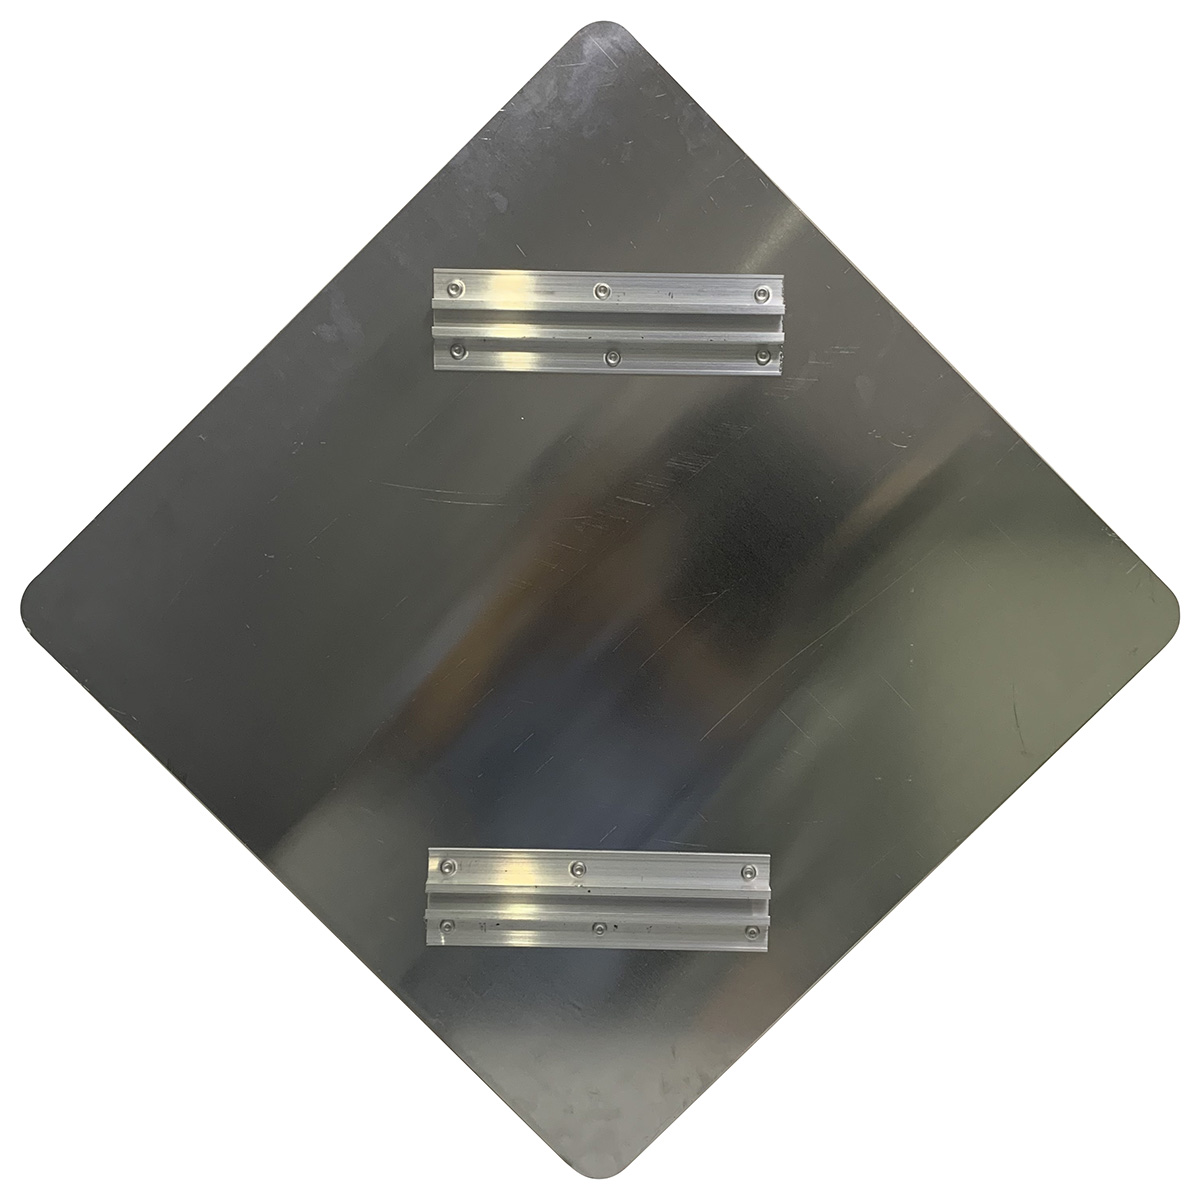 "TURN LEFT" Traffic Marking Reflective Aluminium Plate